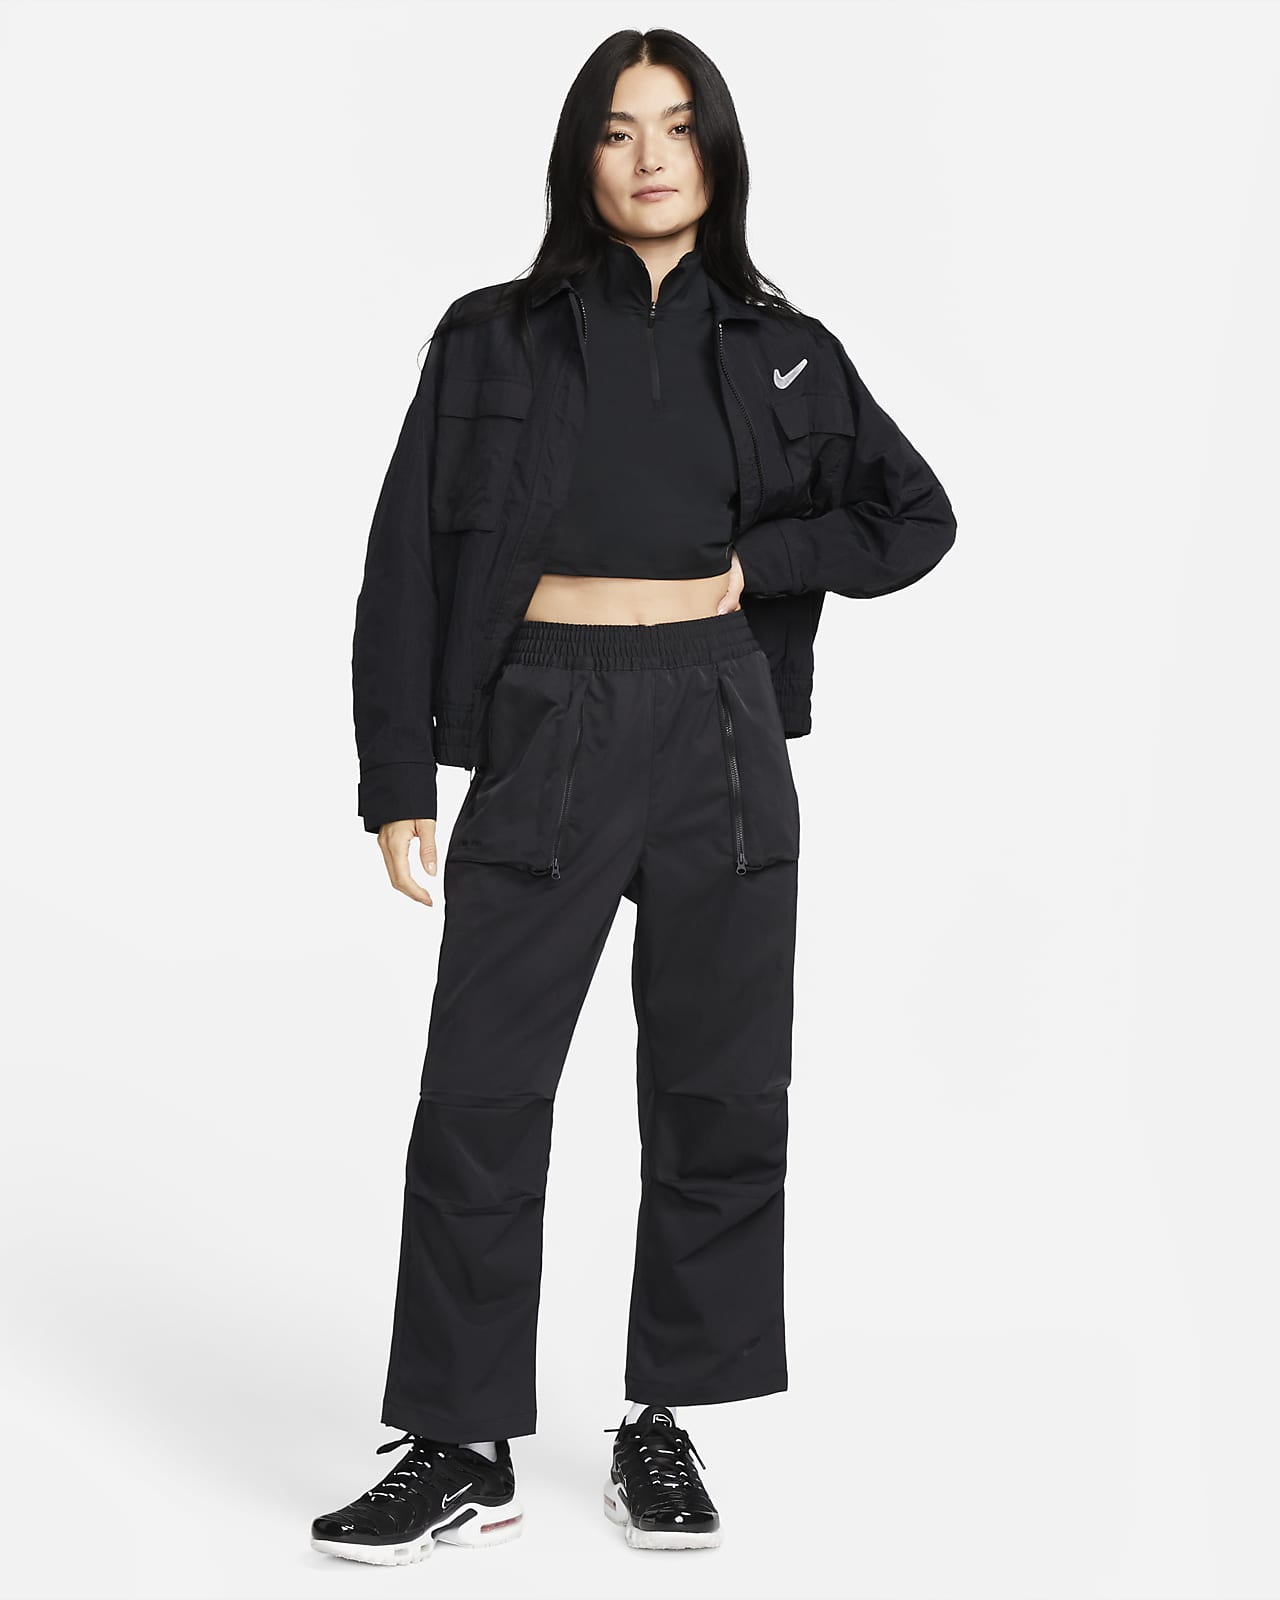 Nike Women's Sportswear Tech Pack Cropped Pants, Black, XS